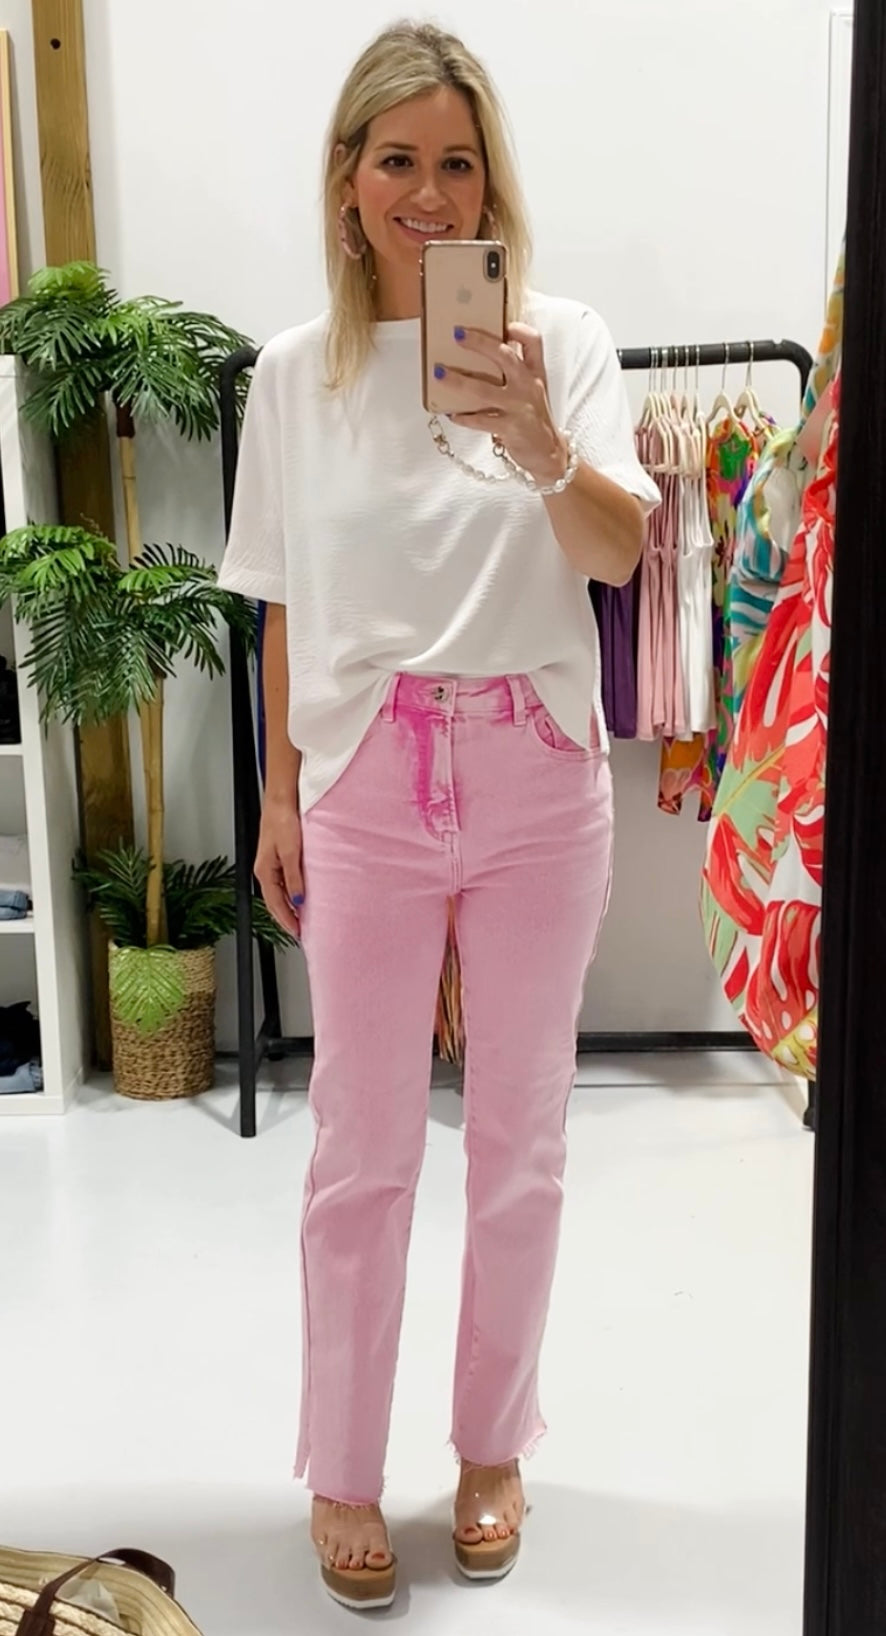 Acid Pink Straight Leg Jeans